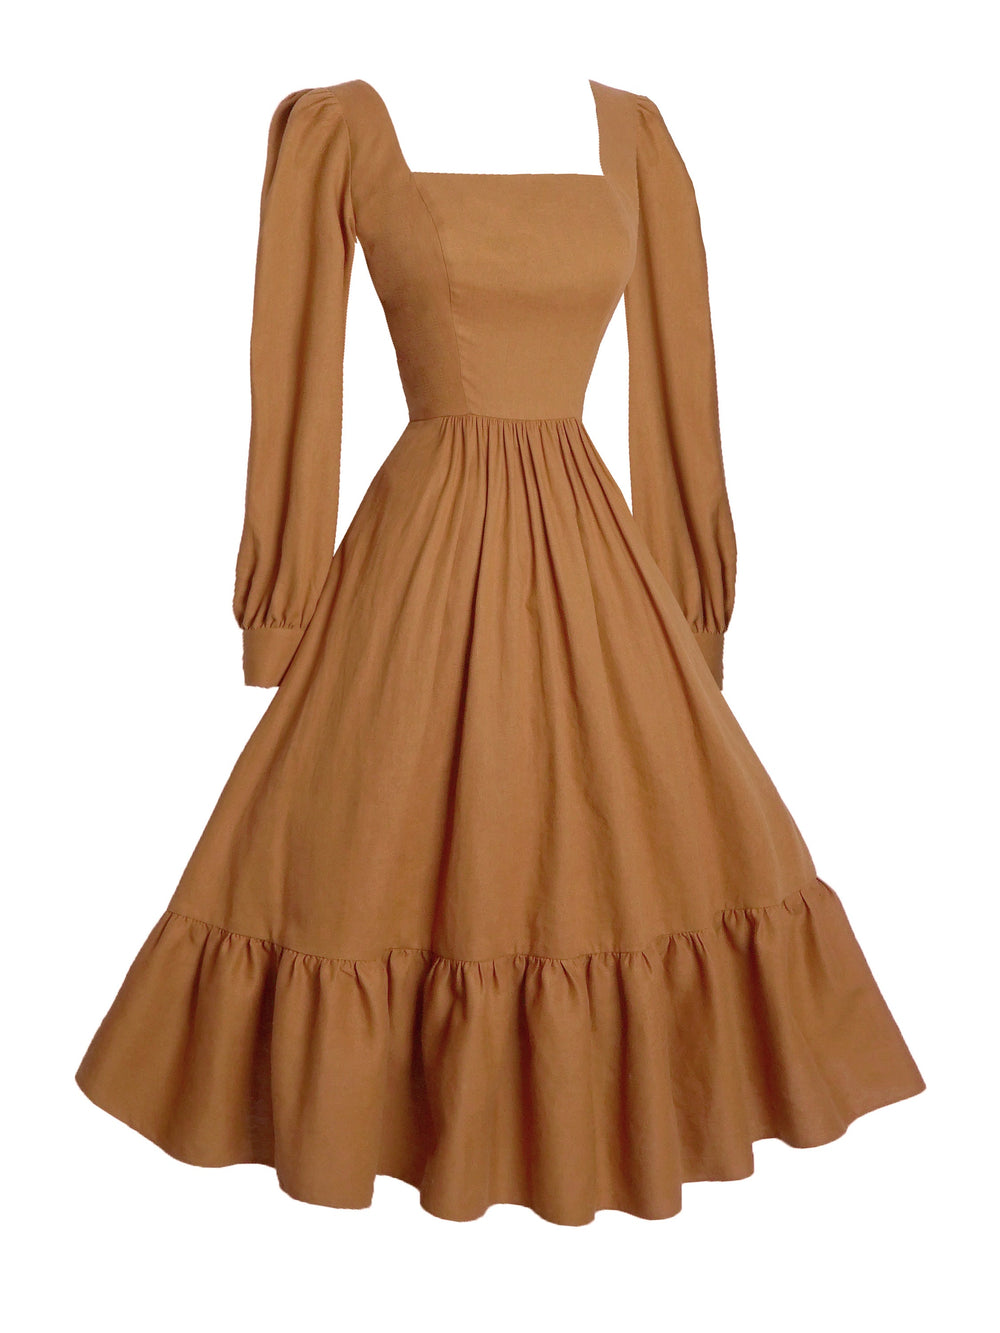 MTO - Mary Dress in Caramel Linen